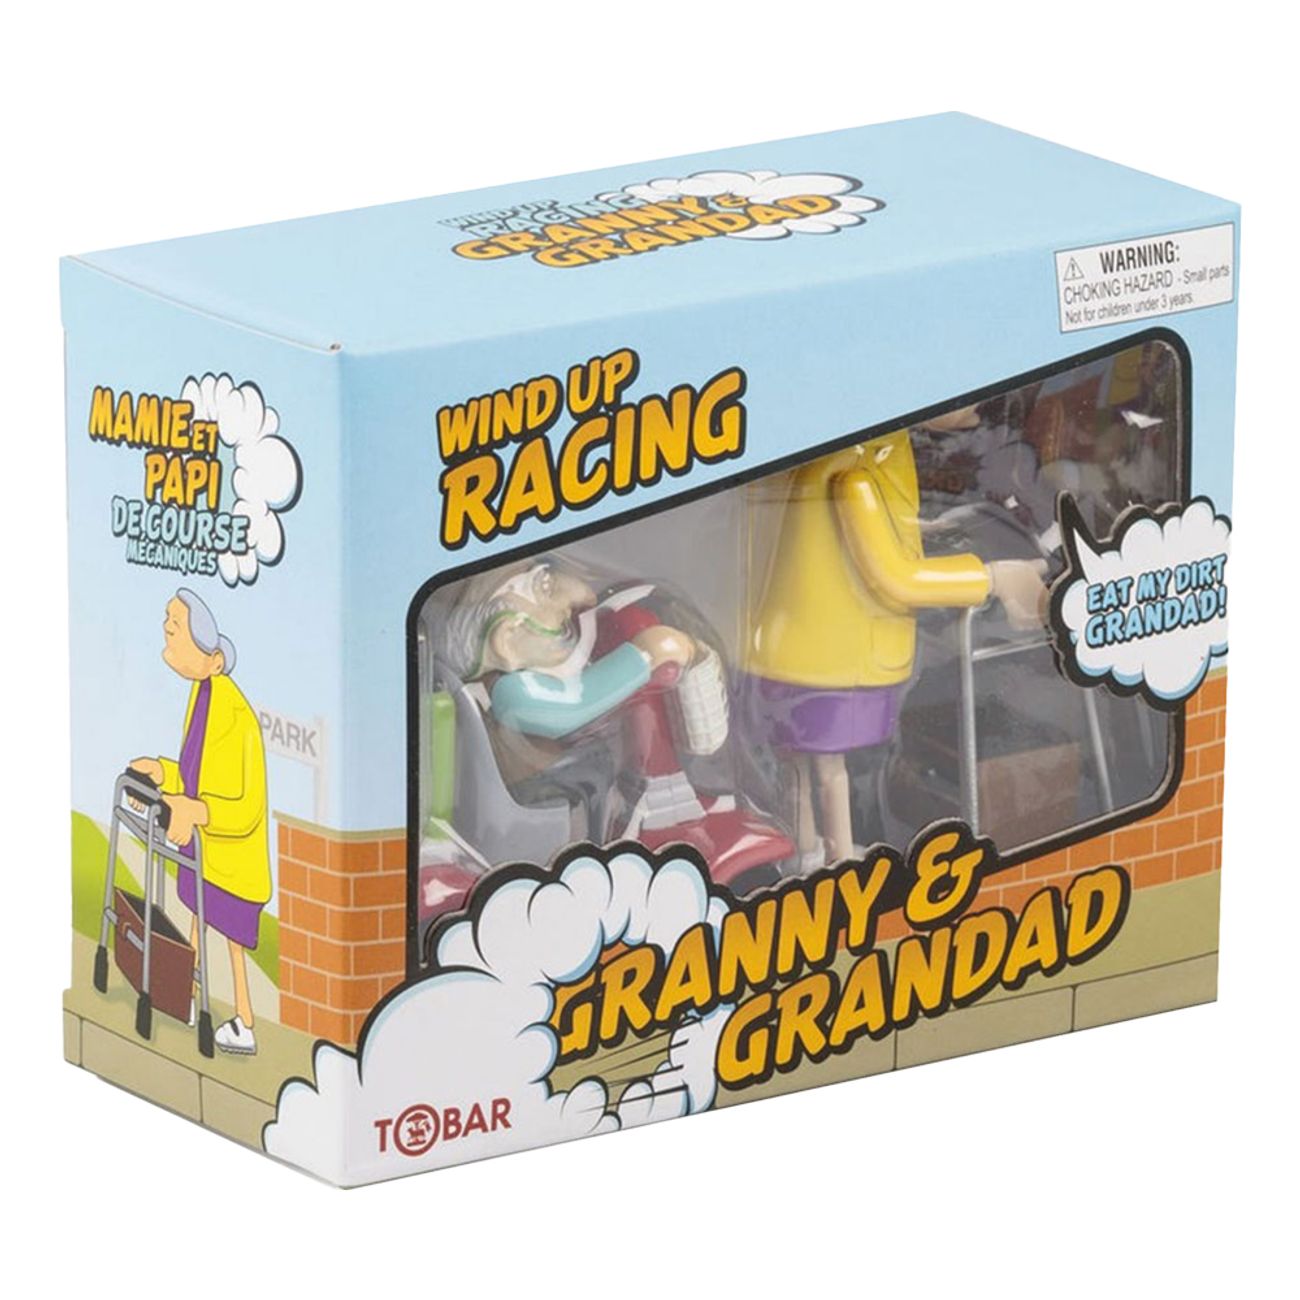 racing-granny-grandad-44308-6